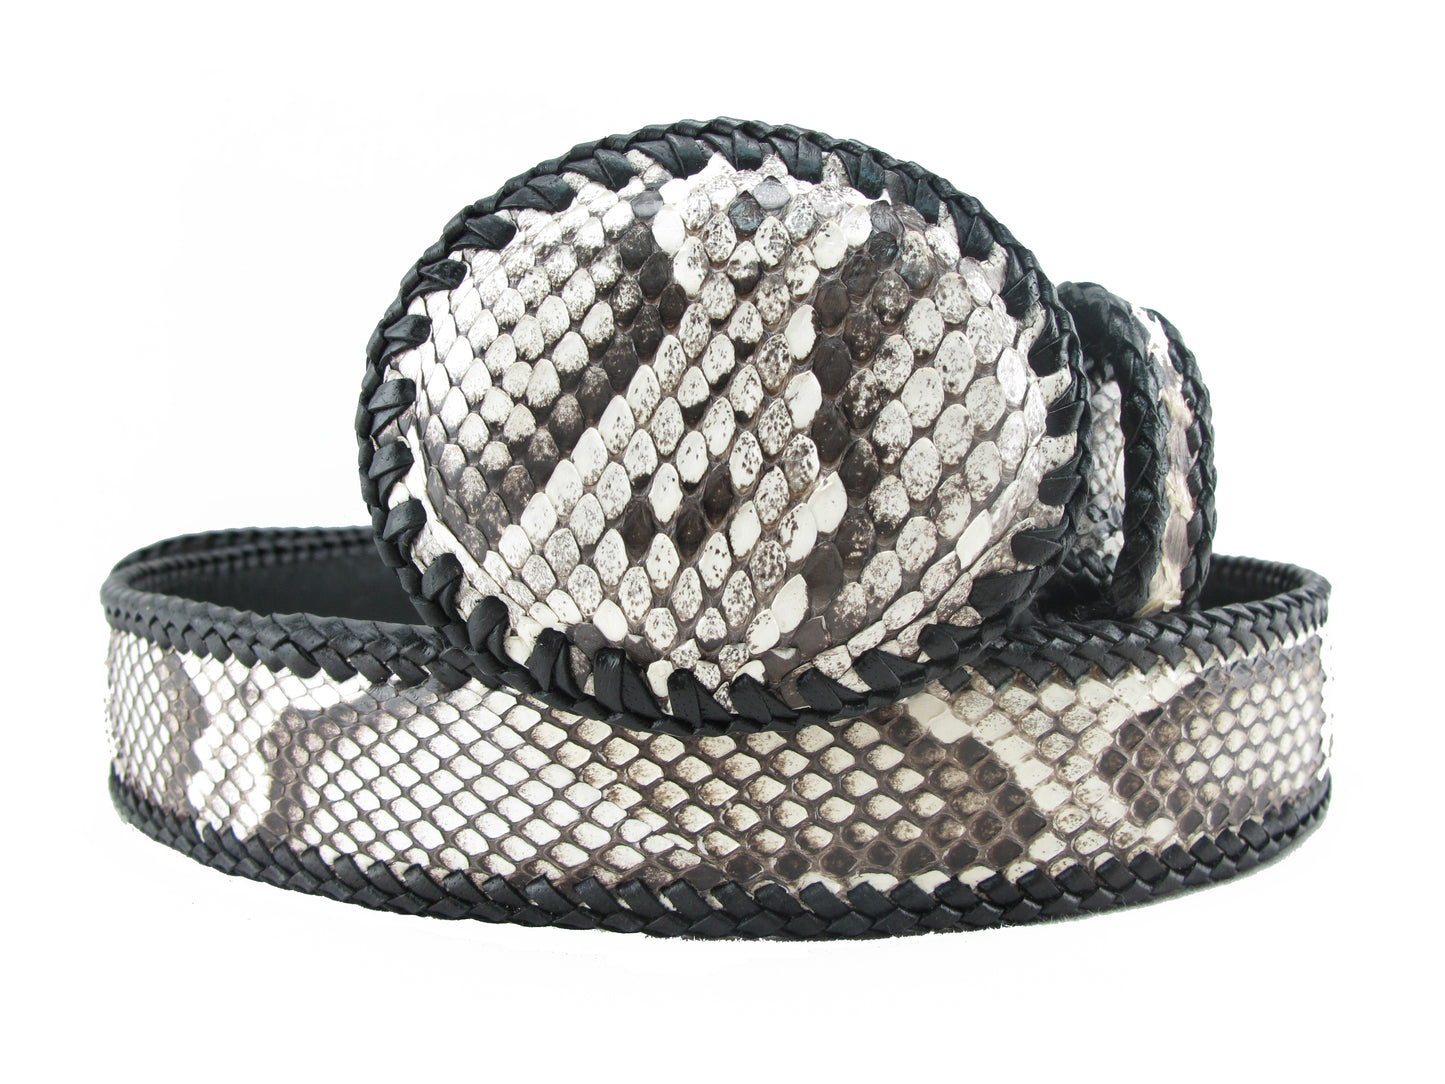 Genuine Burmese Python Snake Skin Leather Cowboy Handmade Men's Belt